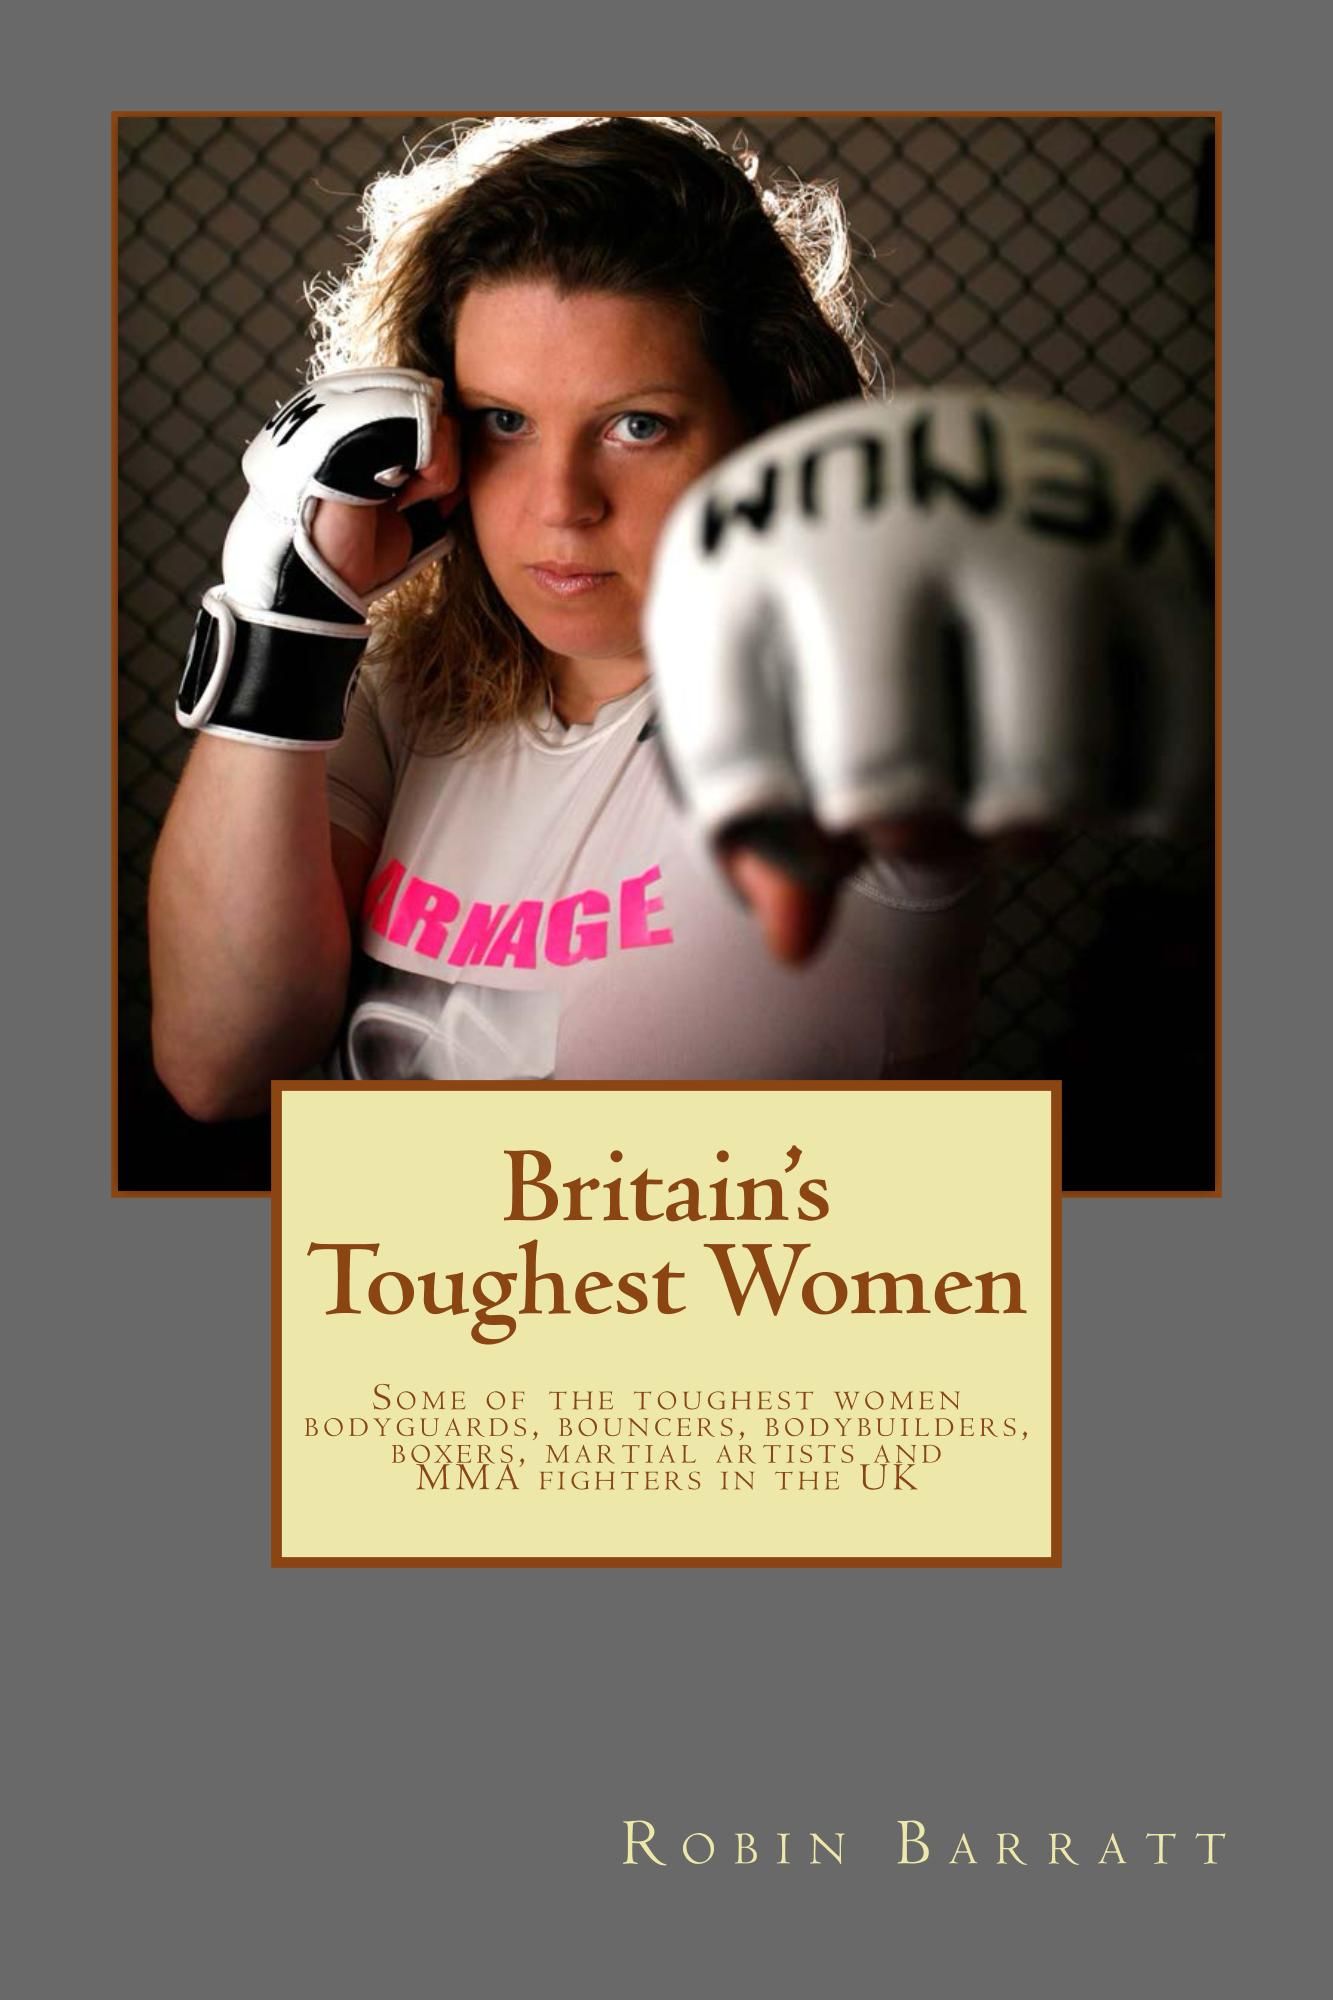 Britain's Toughest women by Robin Barratt